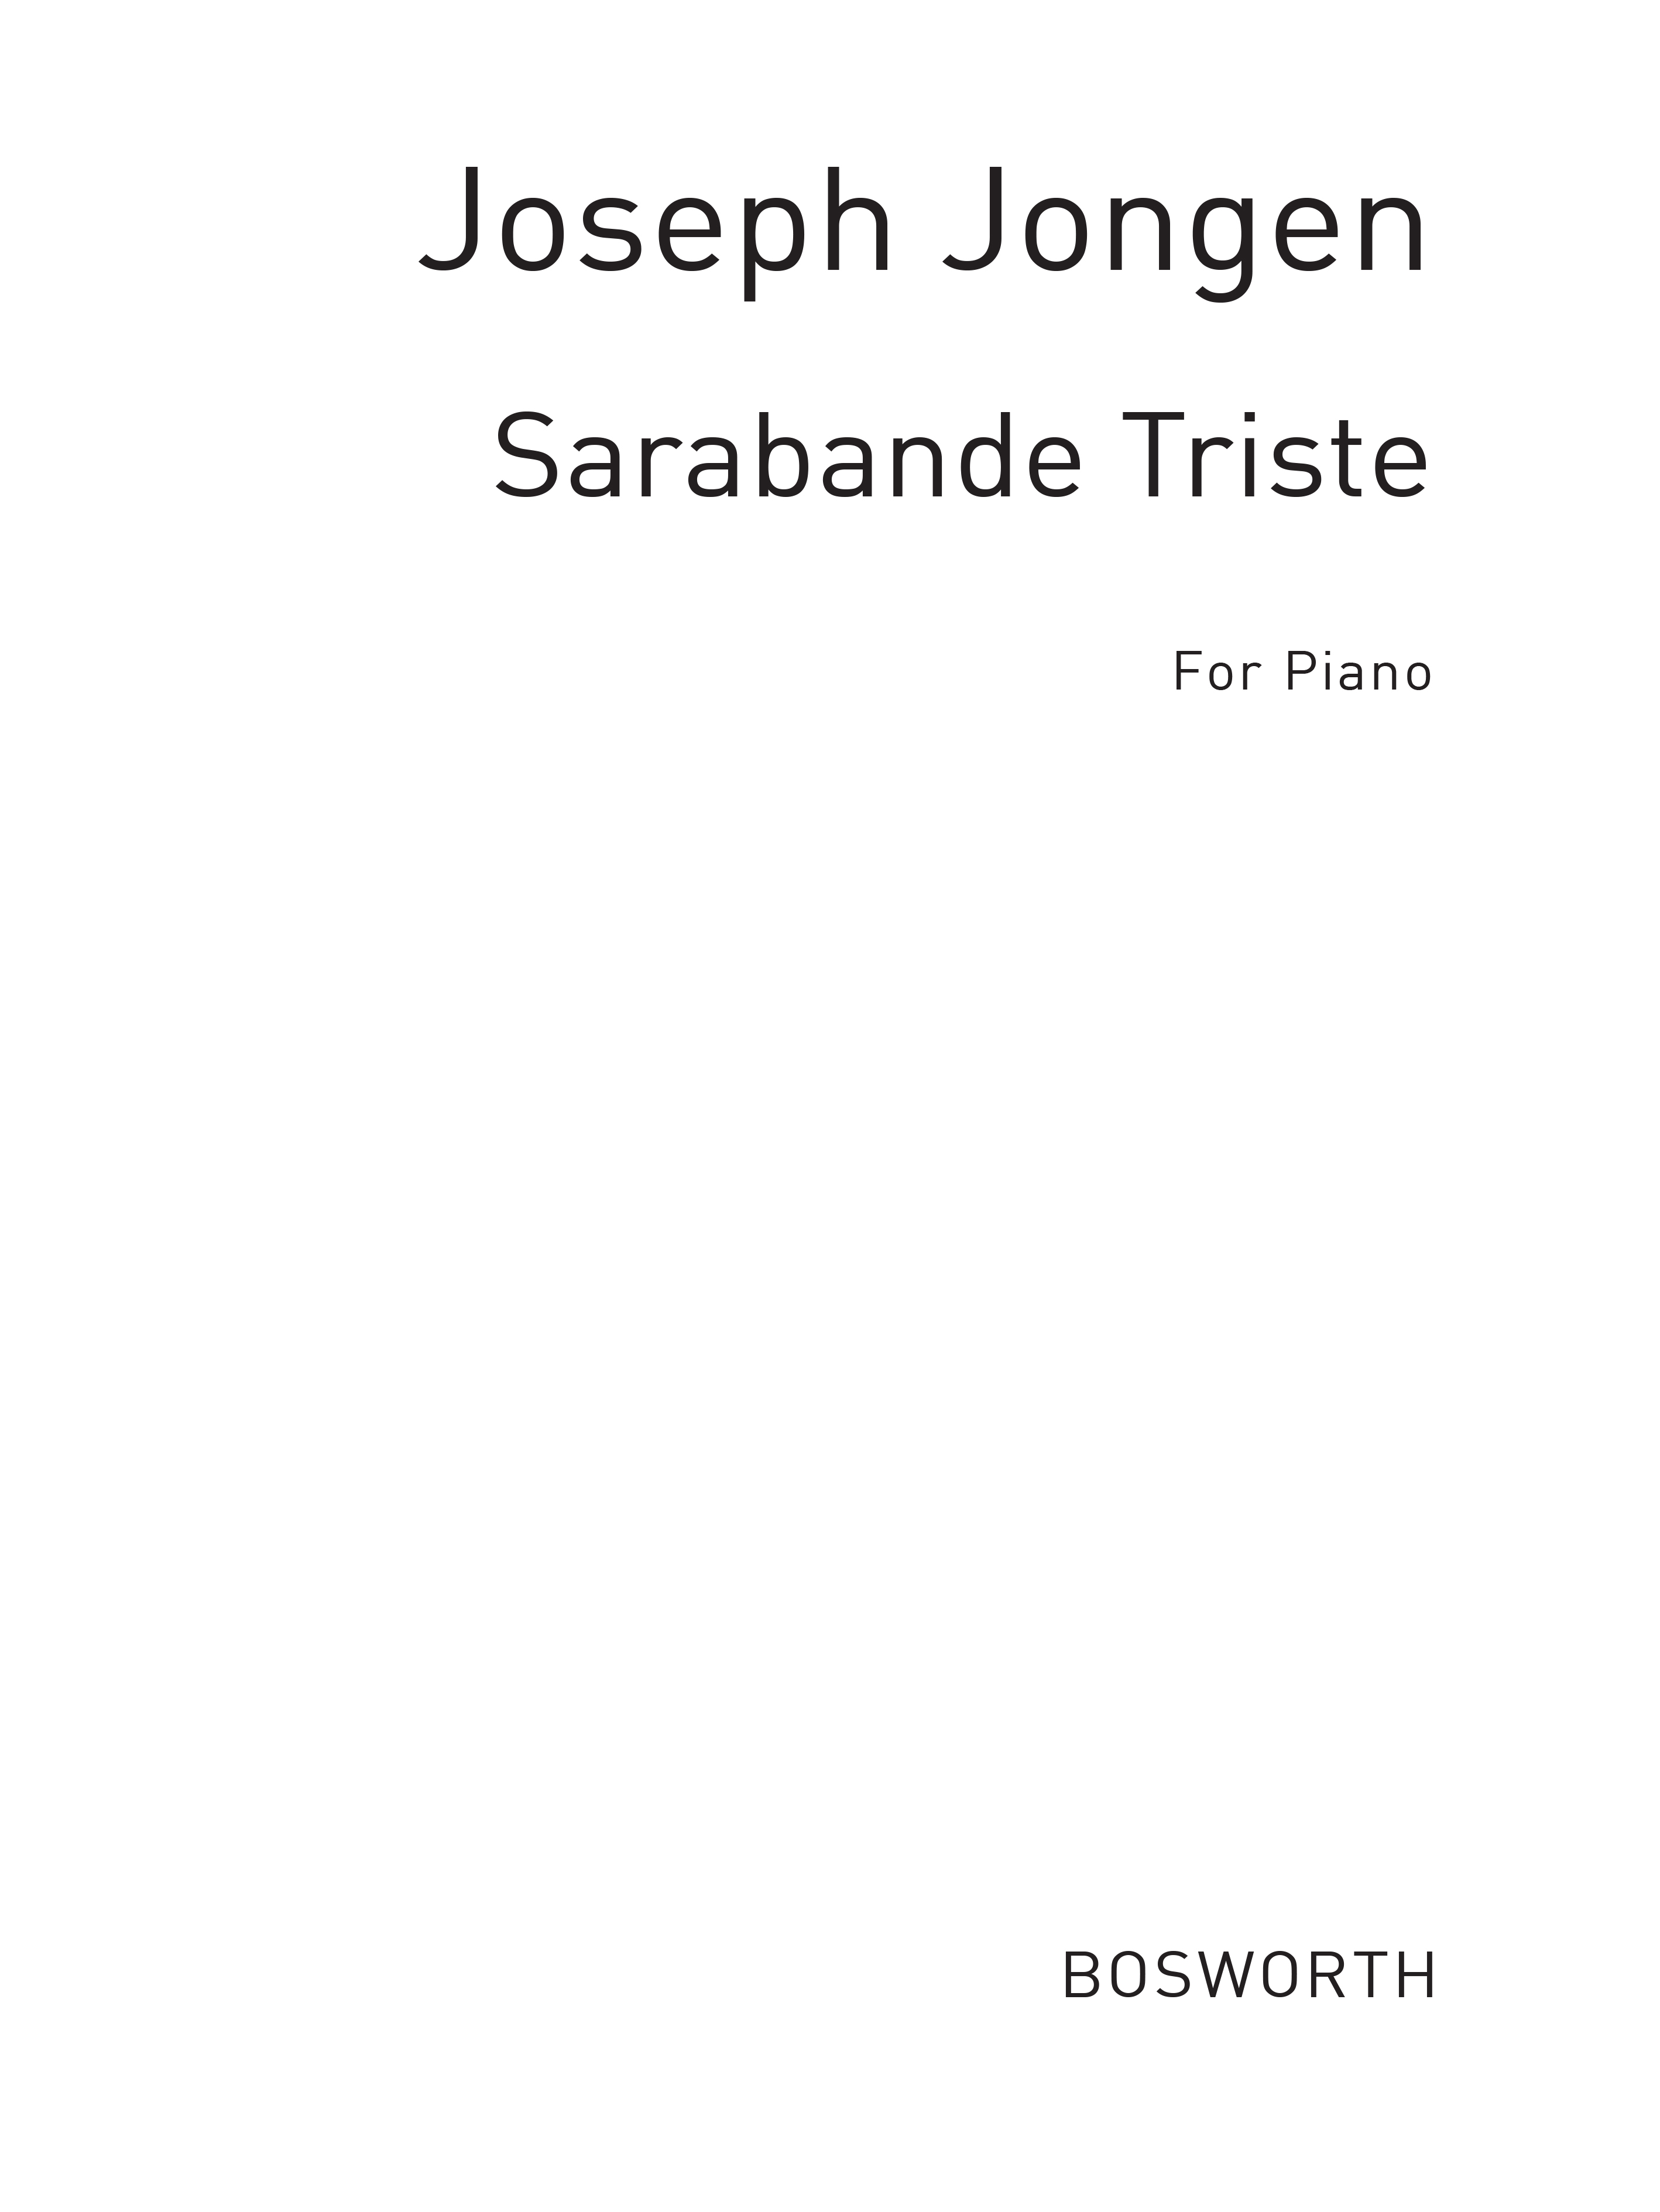 Joseph Jongen: Sarabande Triste Op. 58